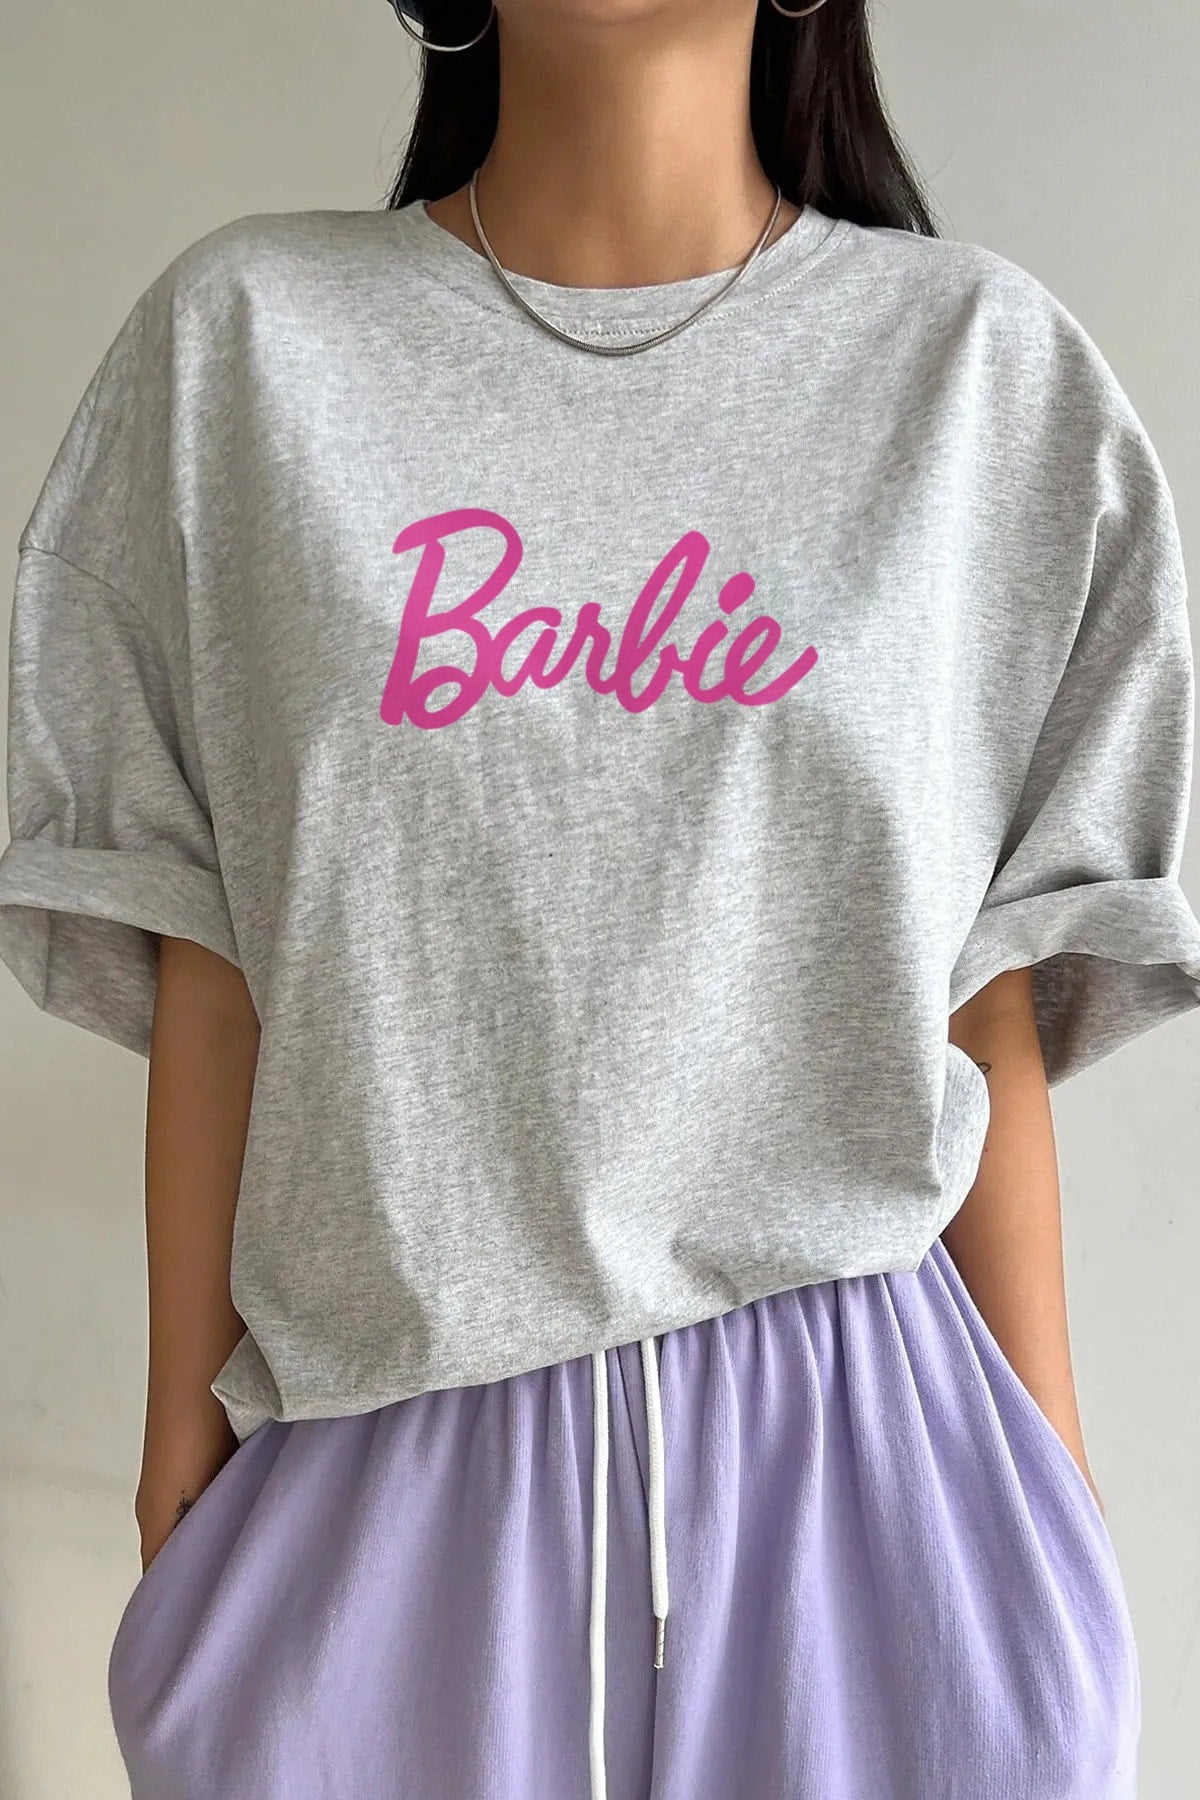 Barbie Printed Adult T-shirt